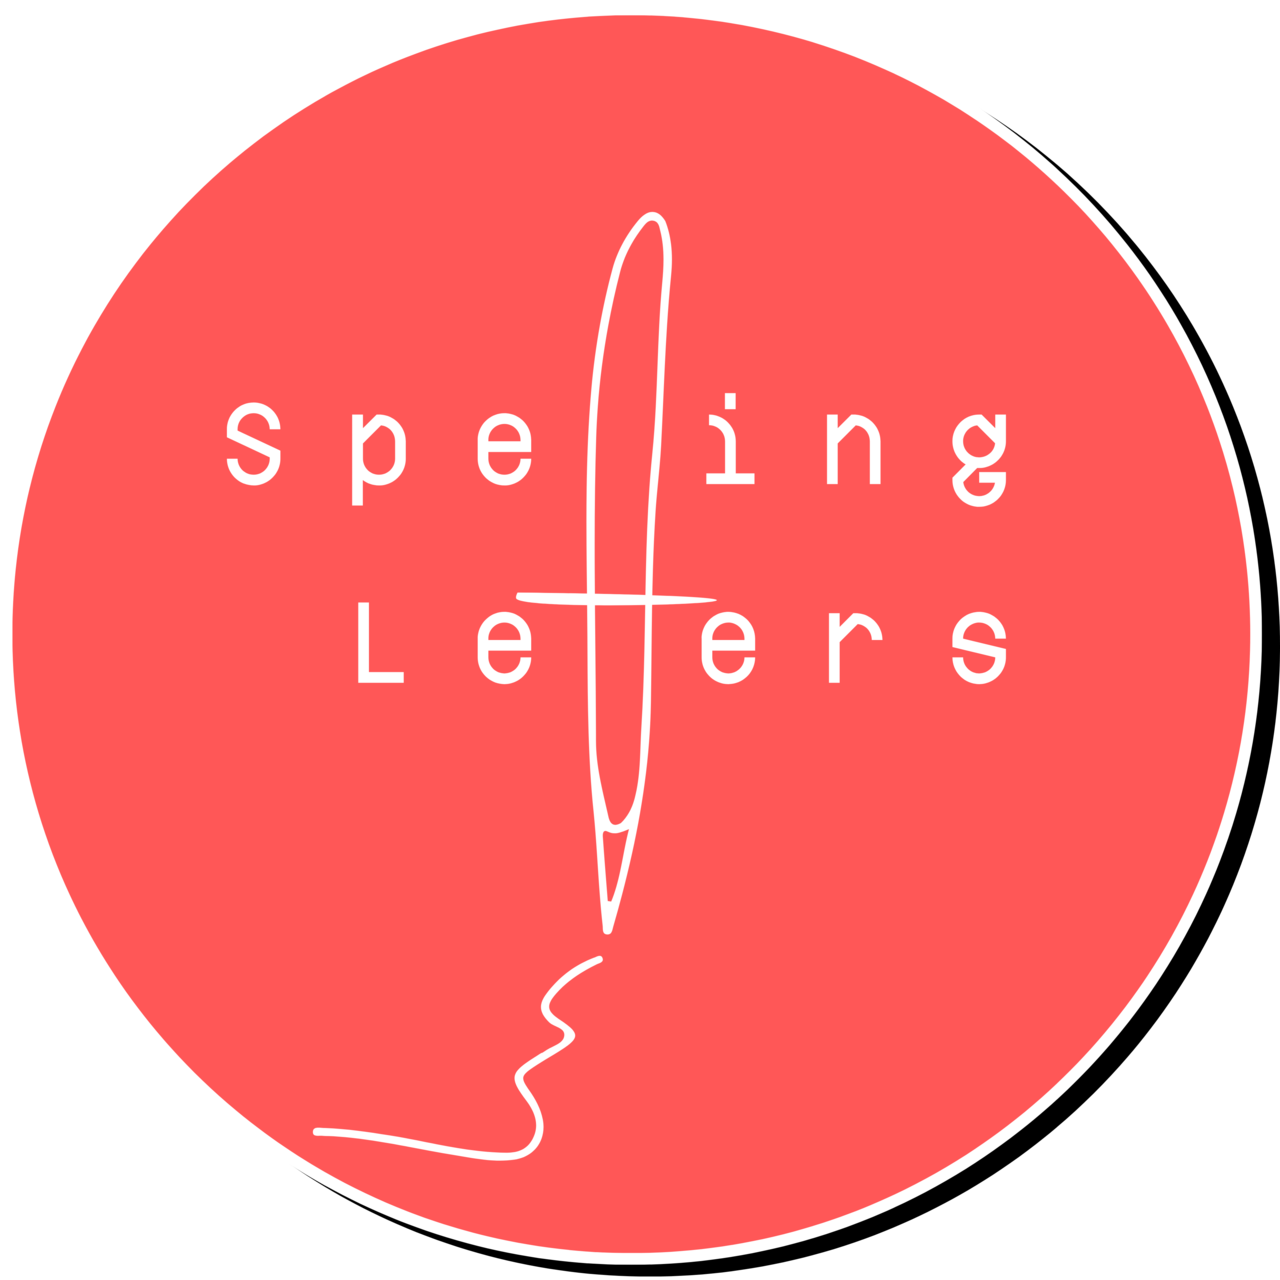 Spelling Letters with Ben Monaco